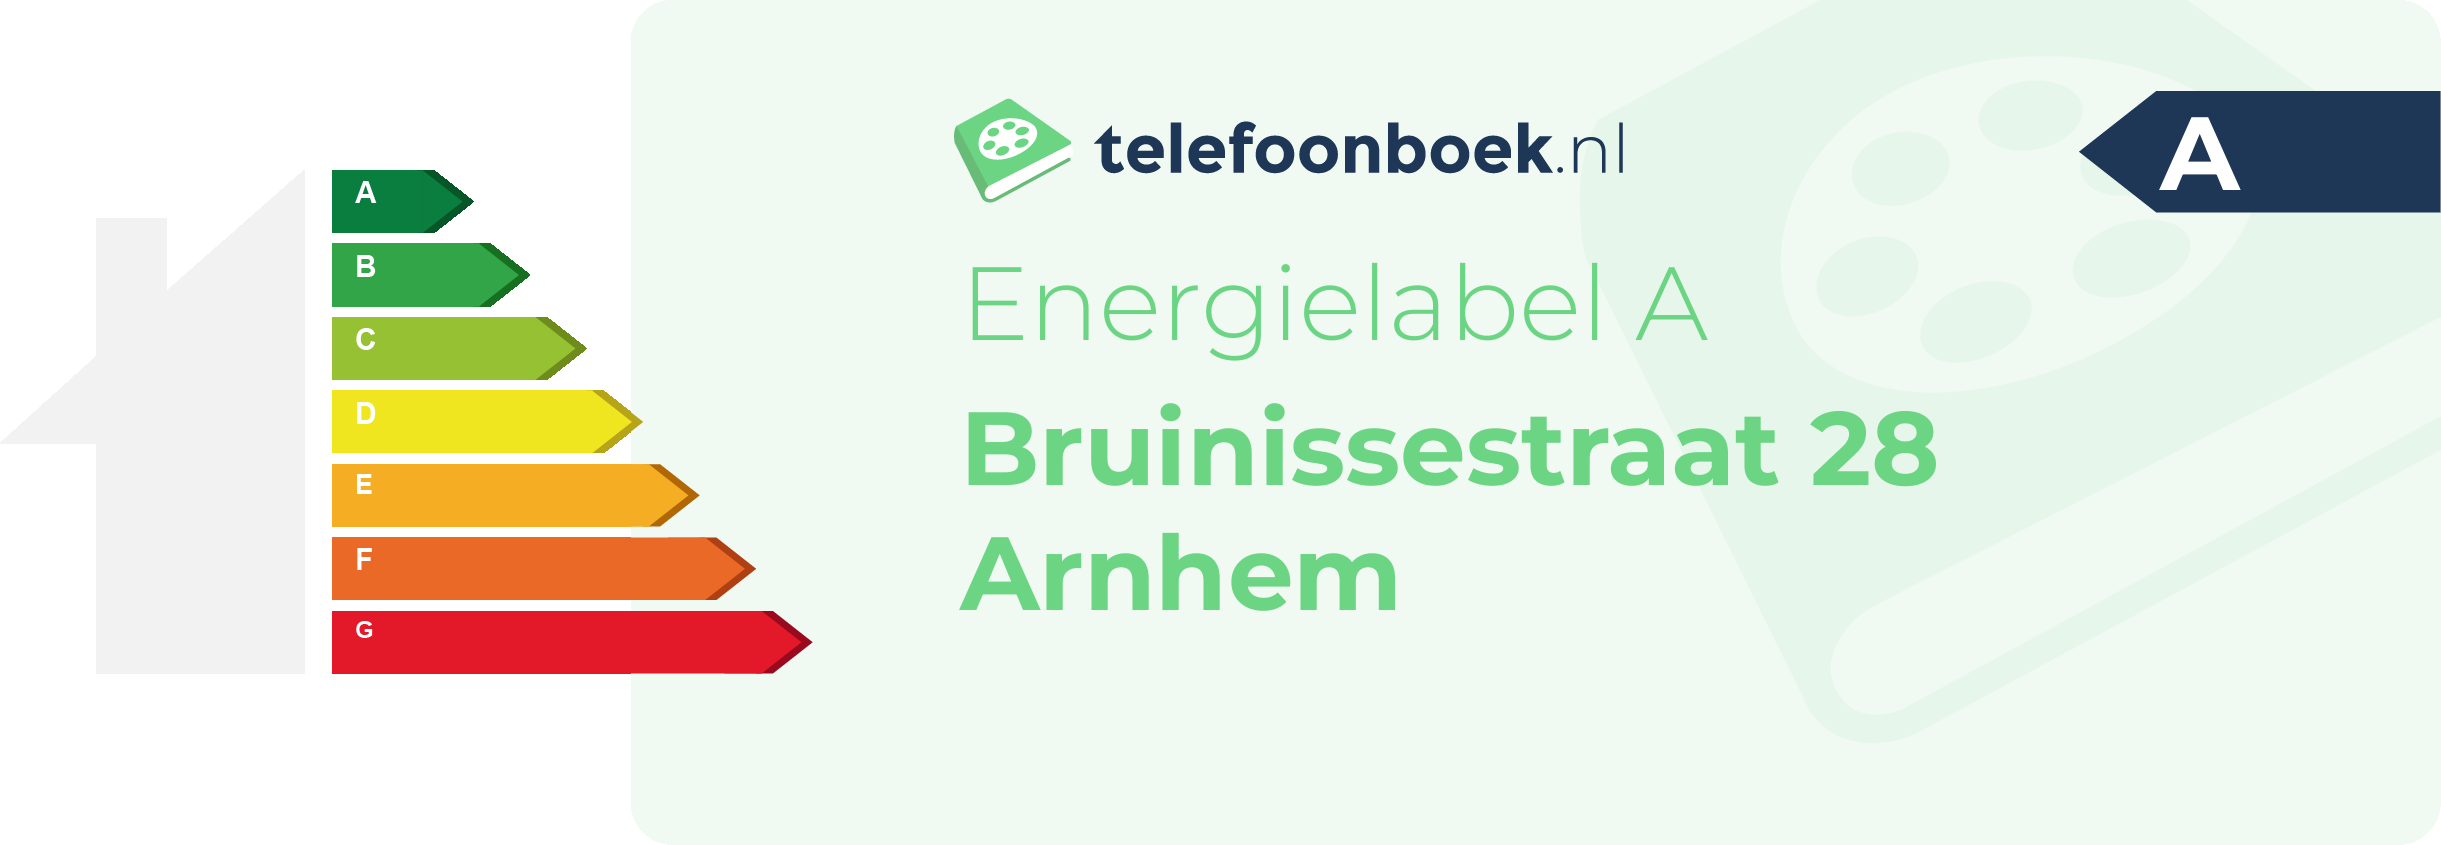 Energielabel Bruinissestraat 28 Arnhem